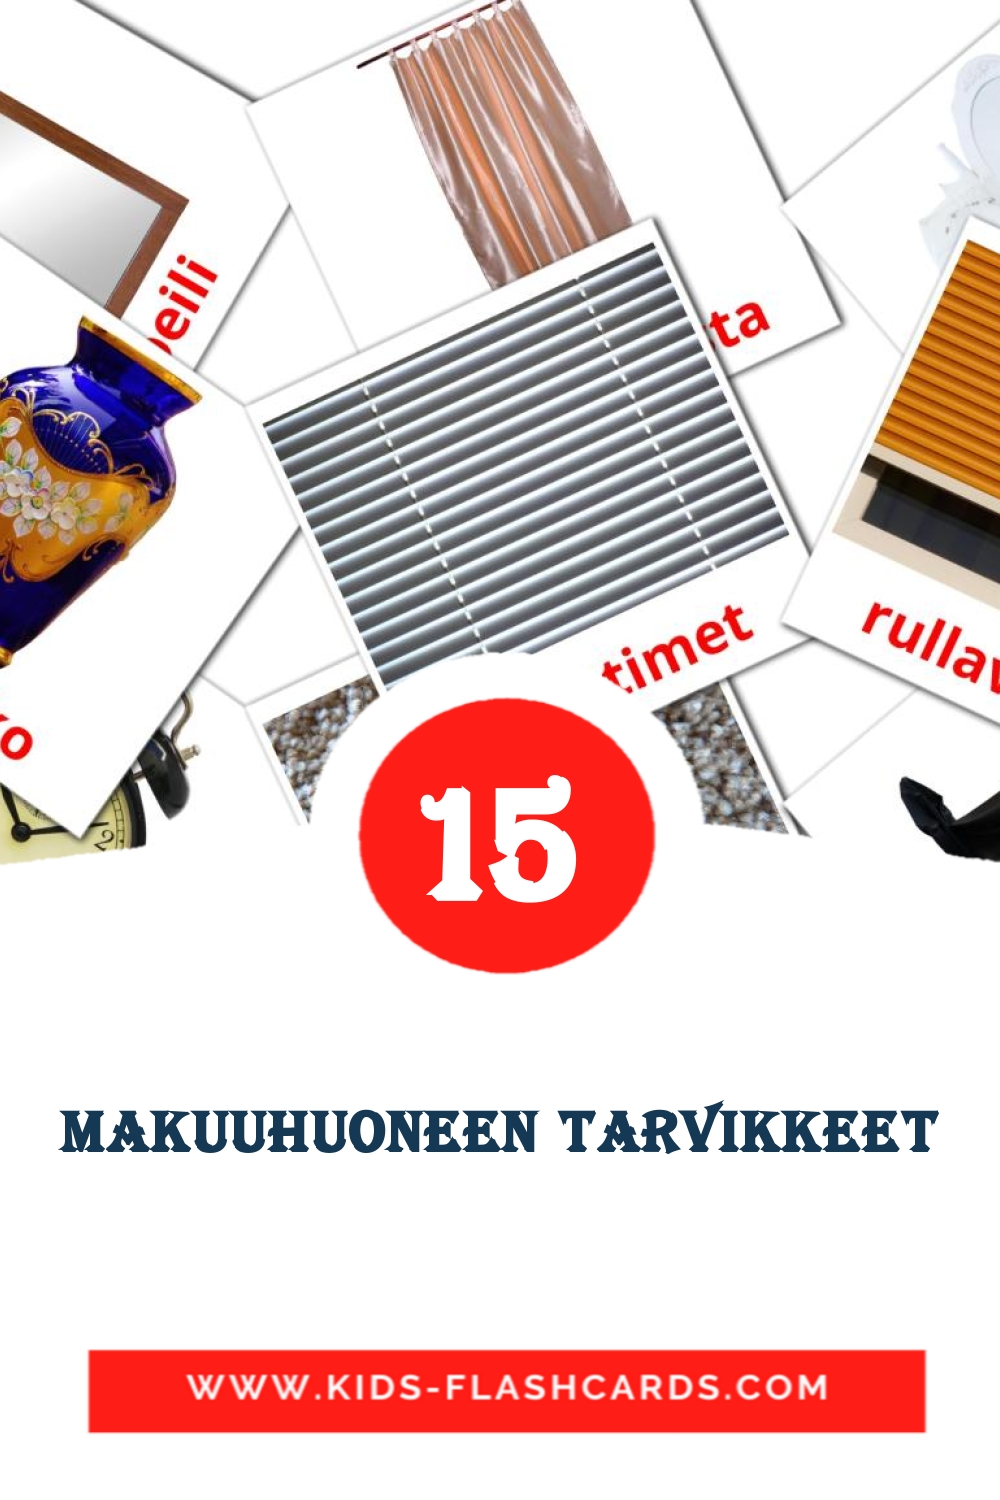 Makuuhuoneen tarvikkeet на финском для Детского Сада (15 карточек)